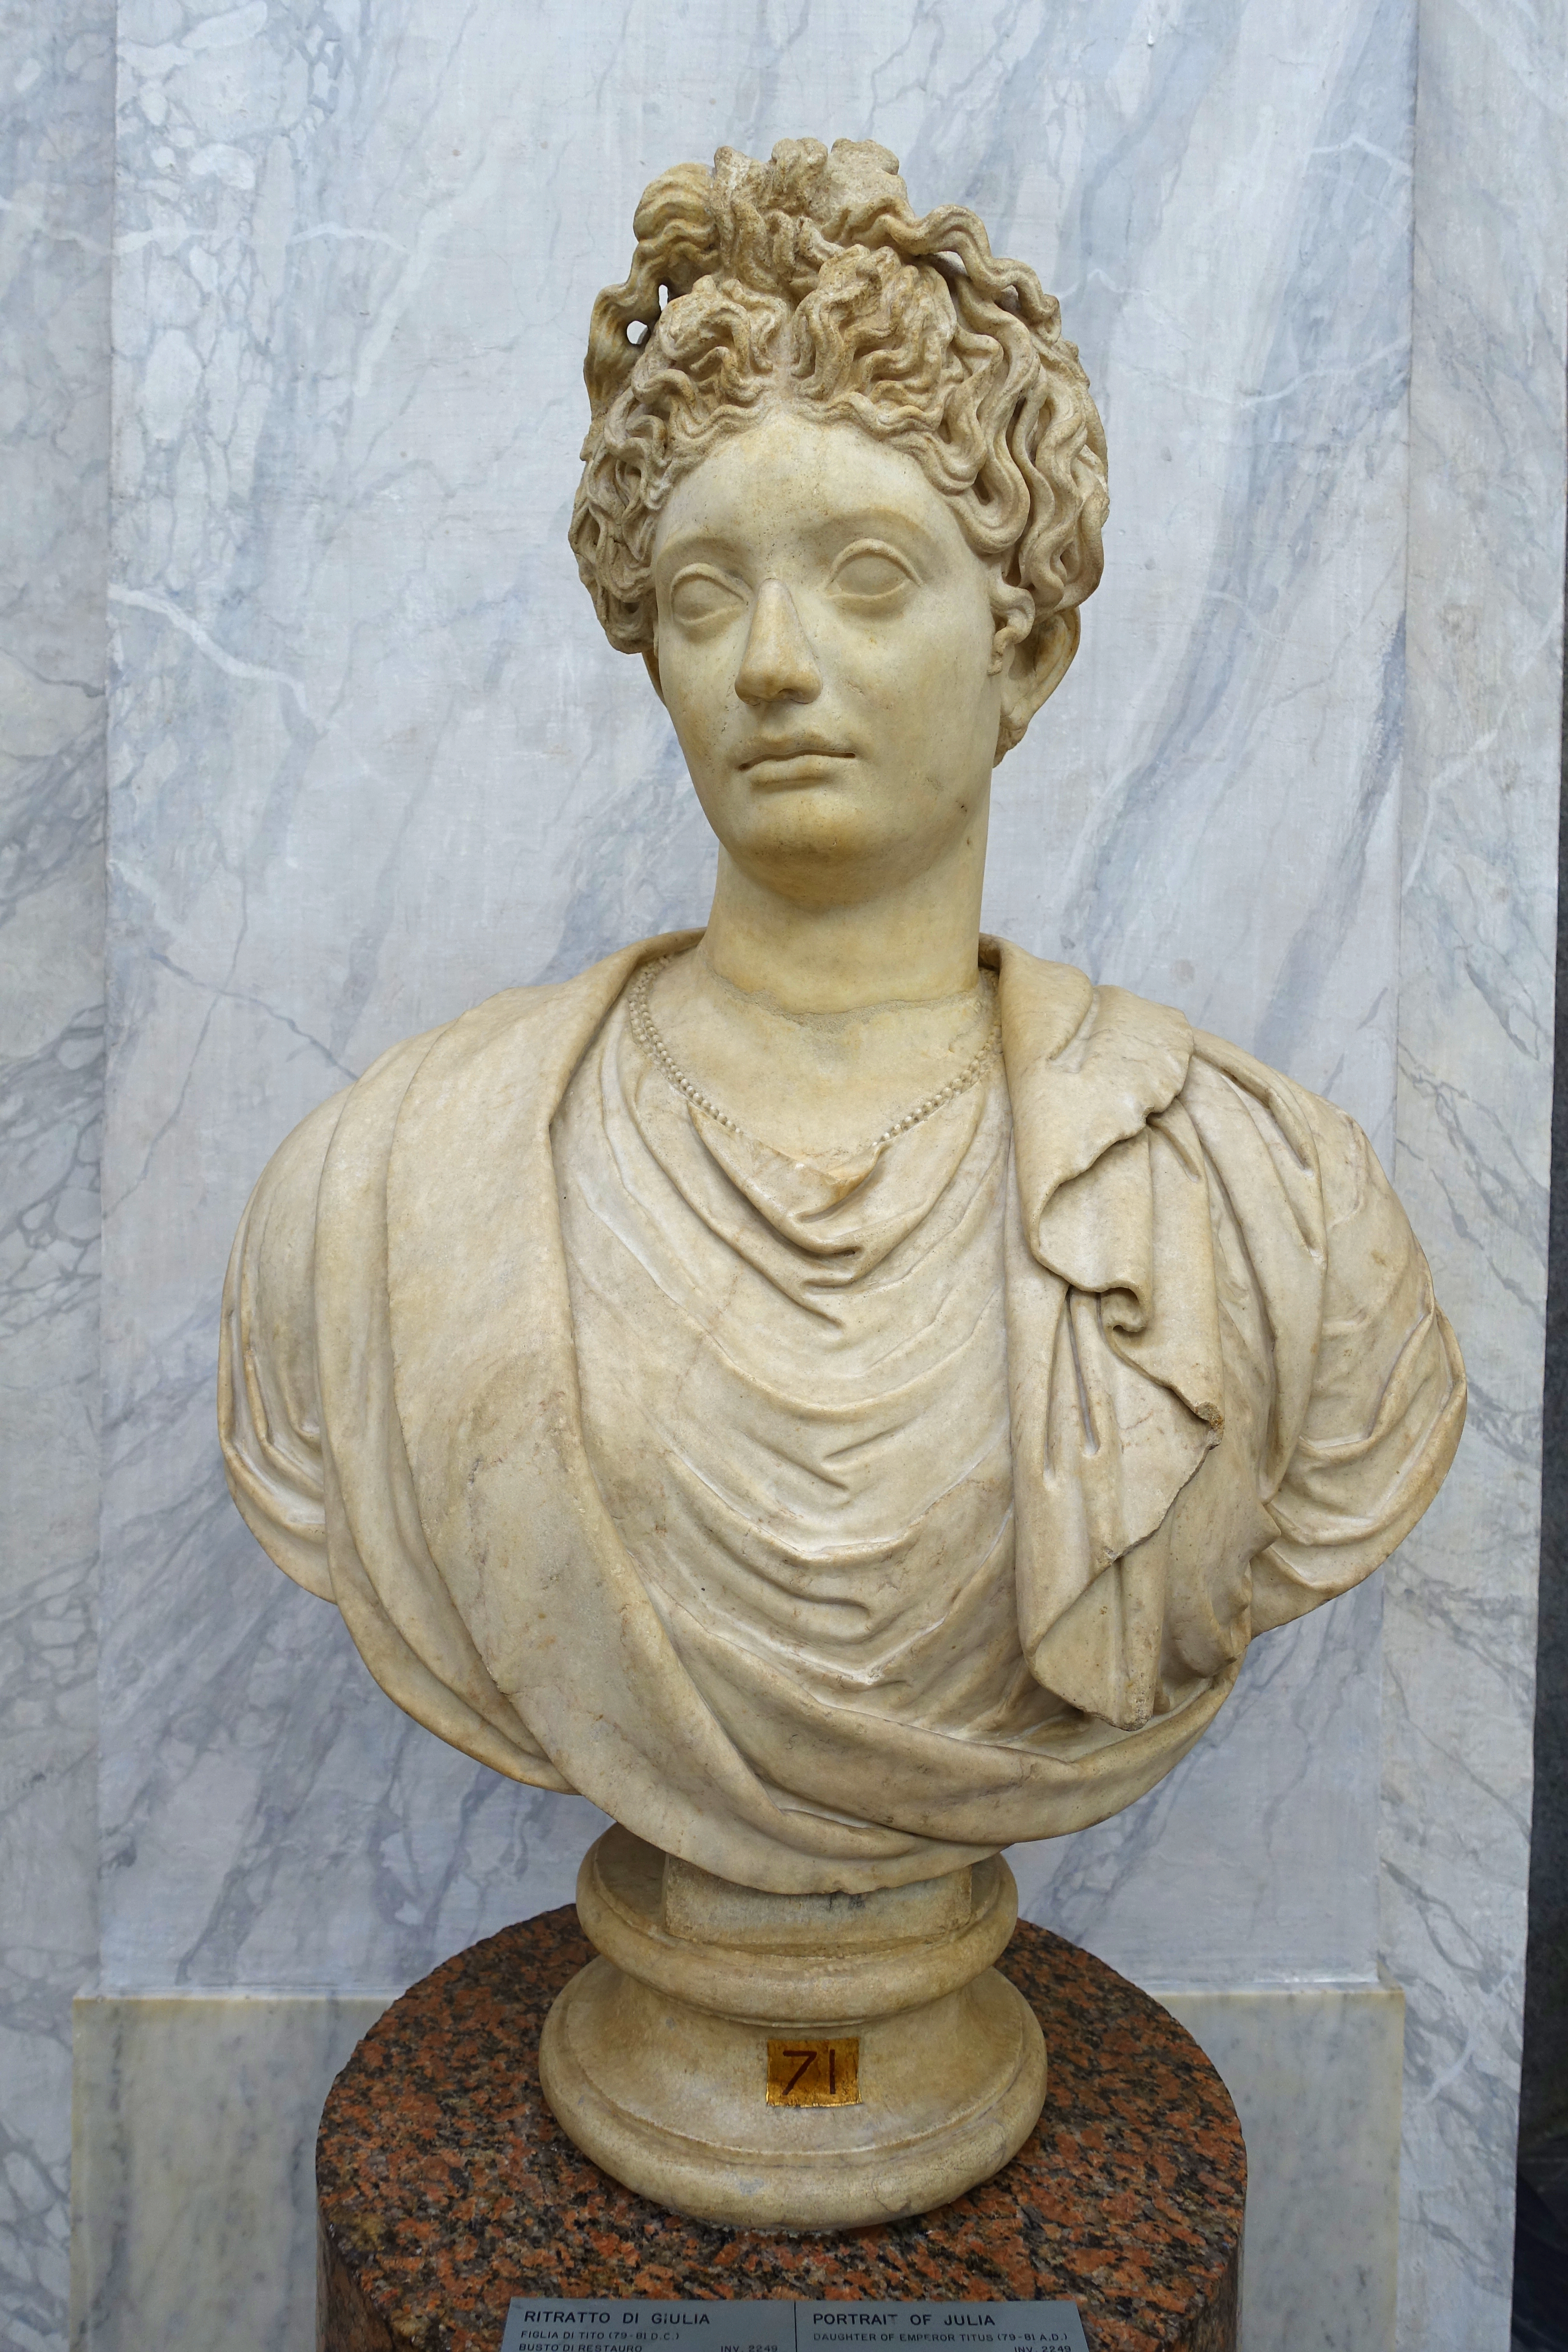 https://upload.wikimedia.org/wikipedia/commons/e/ee/Julia_bust%2C_inv._2249%2C_daughter_of_Emperor_Titus%2C_Roman%2C_79-81_AD_-_Braccio_Nuovo%2C_Museo_Chiaramonti_-_Vatican_Museums_-_DSC00926.jpg